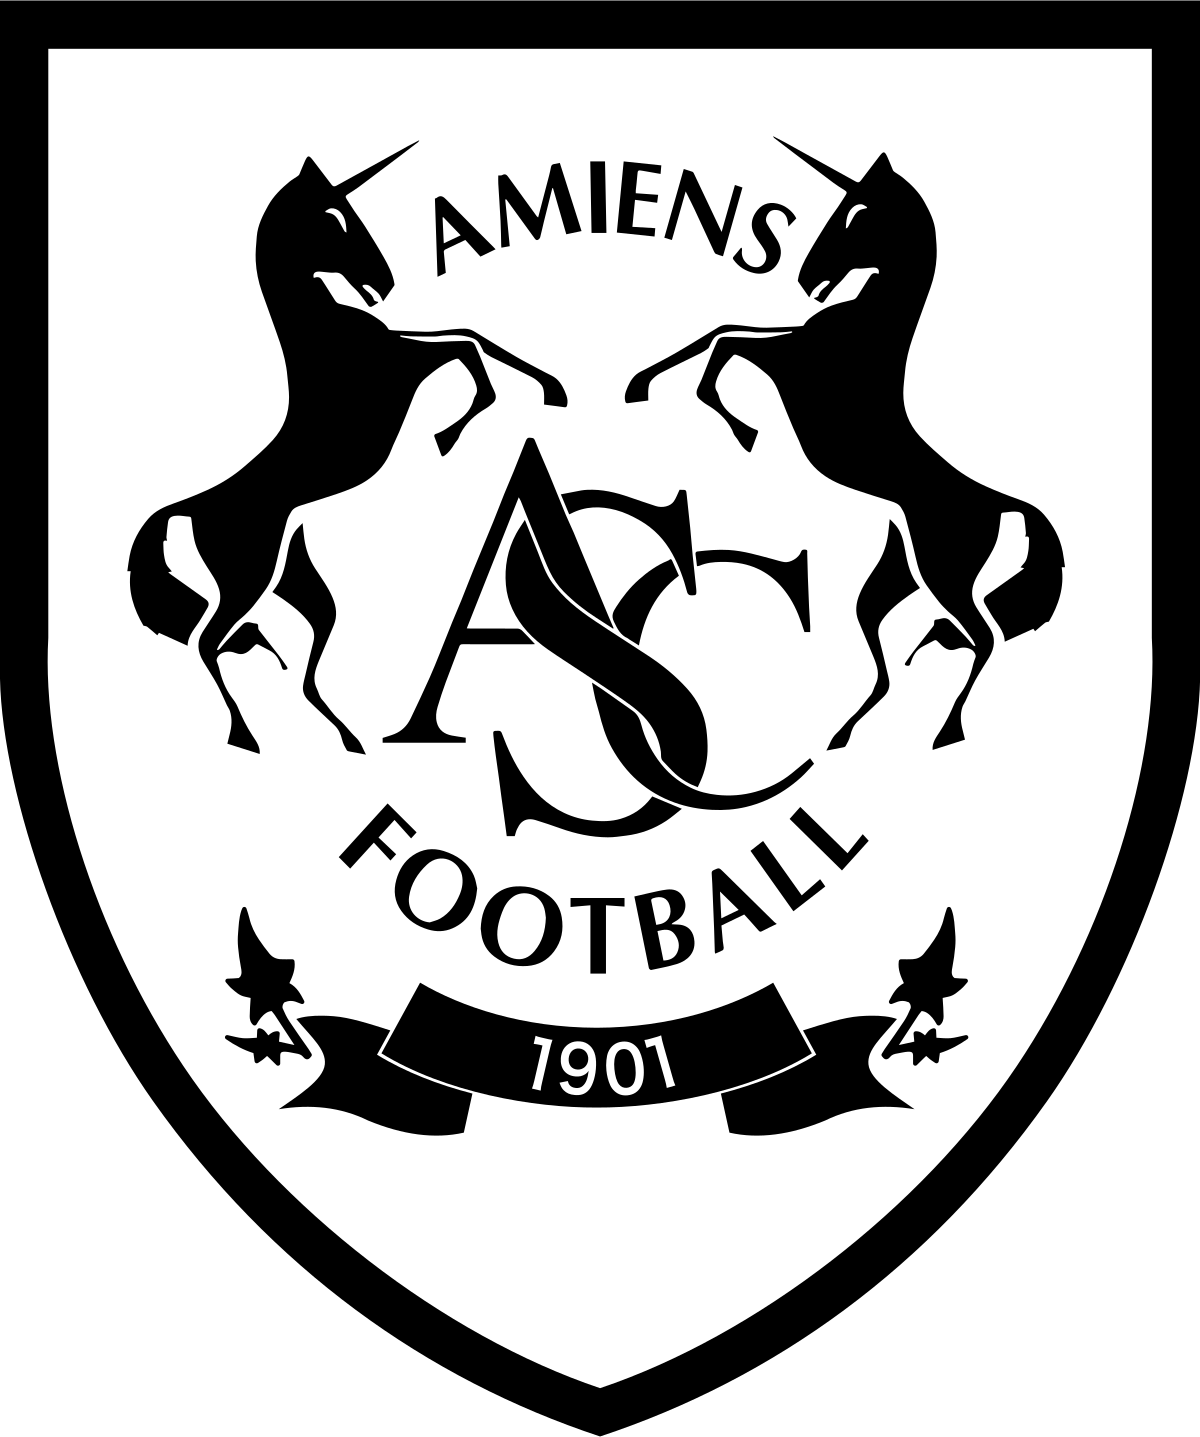 Amiens SC - Wikipedia